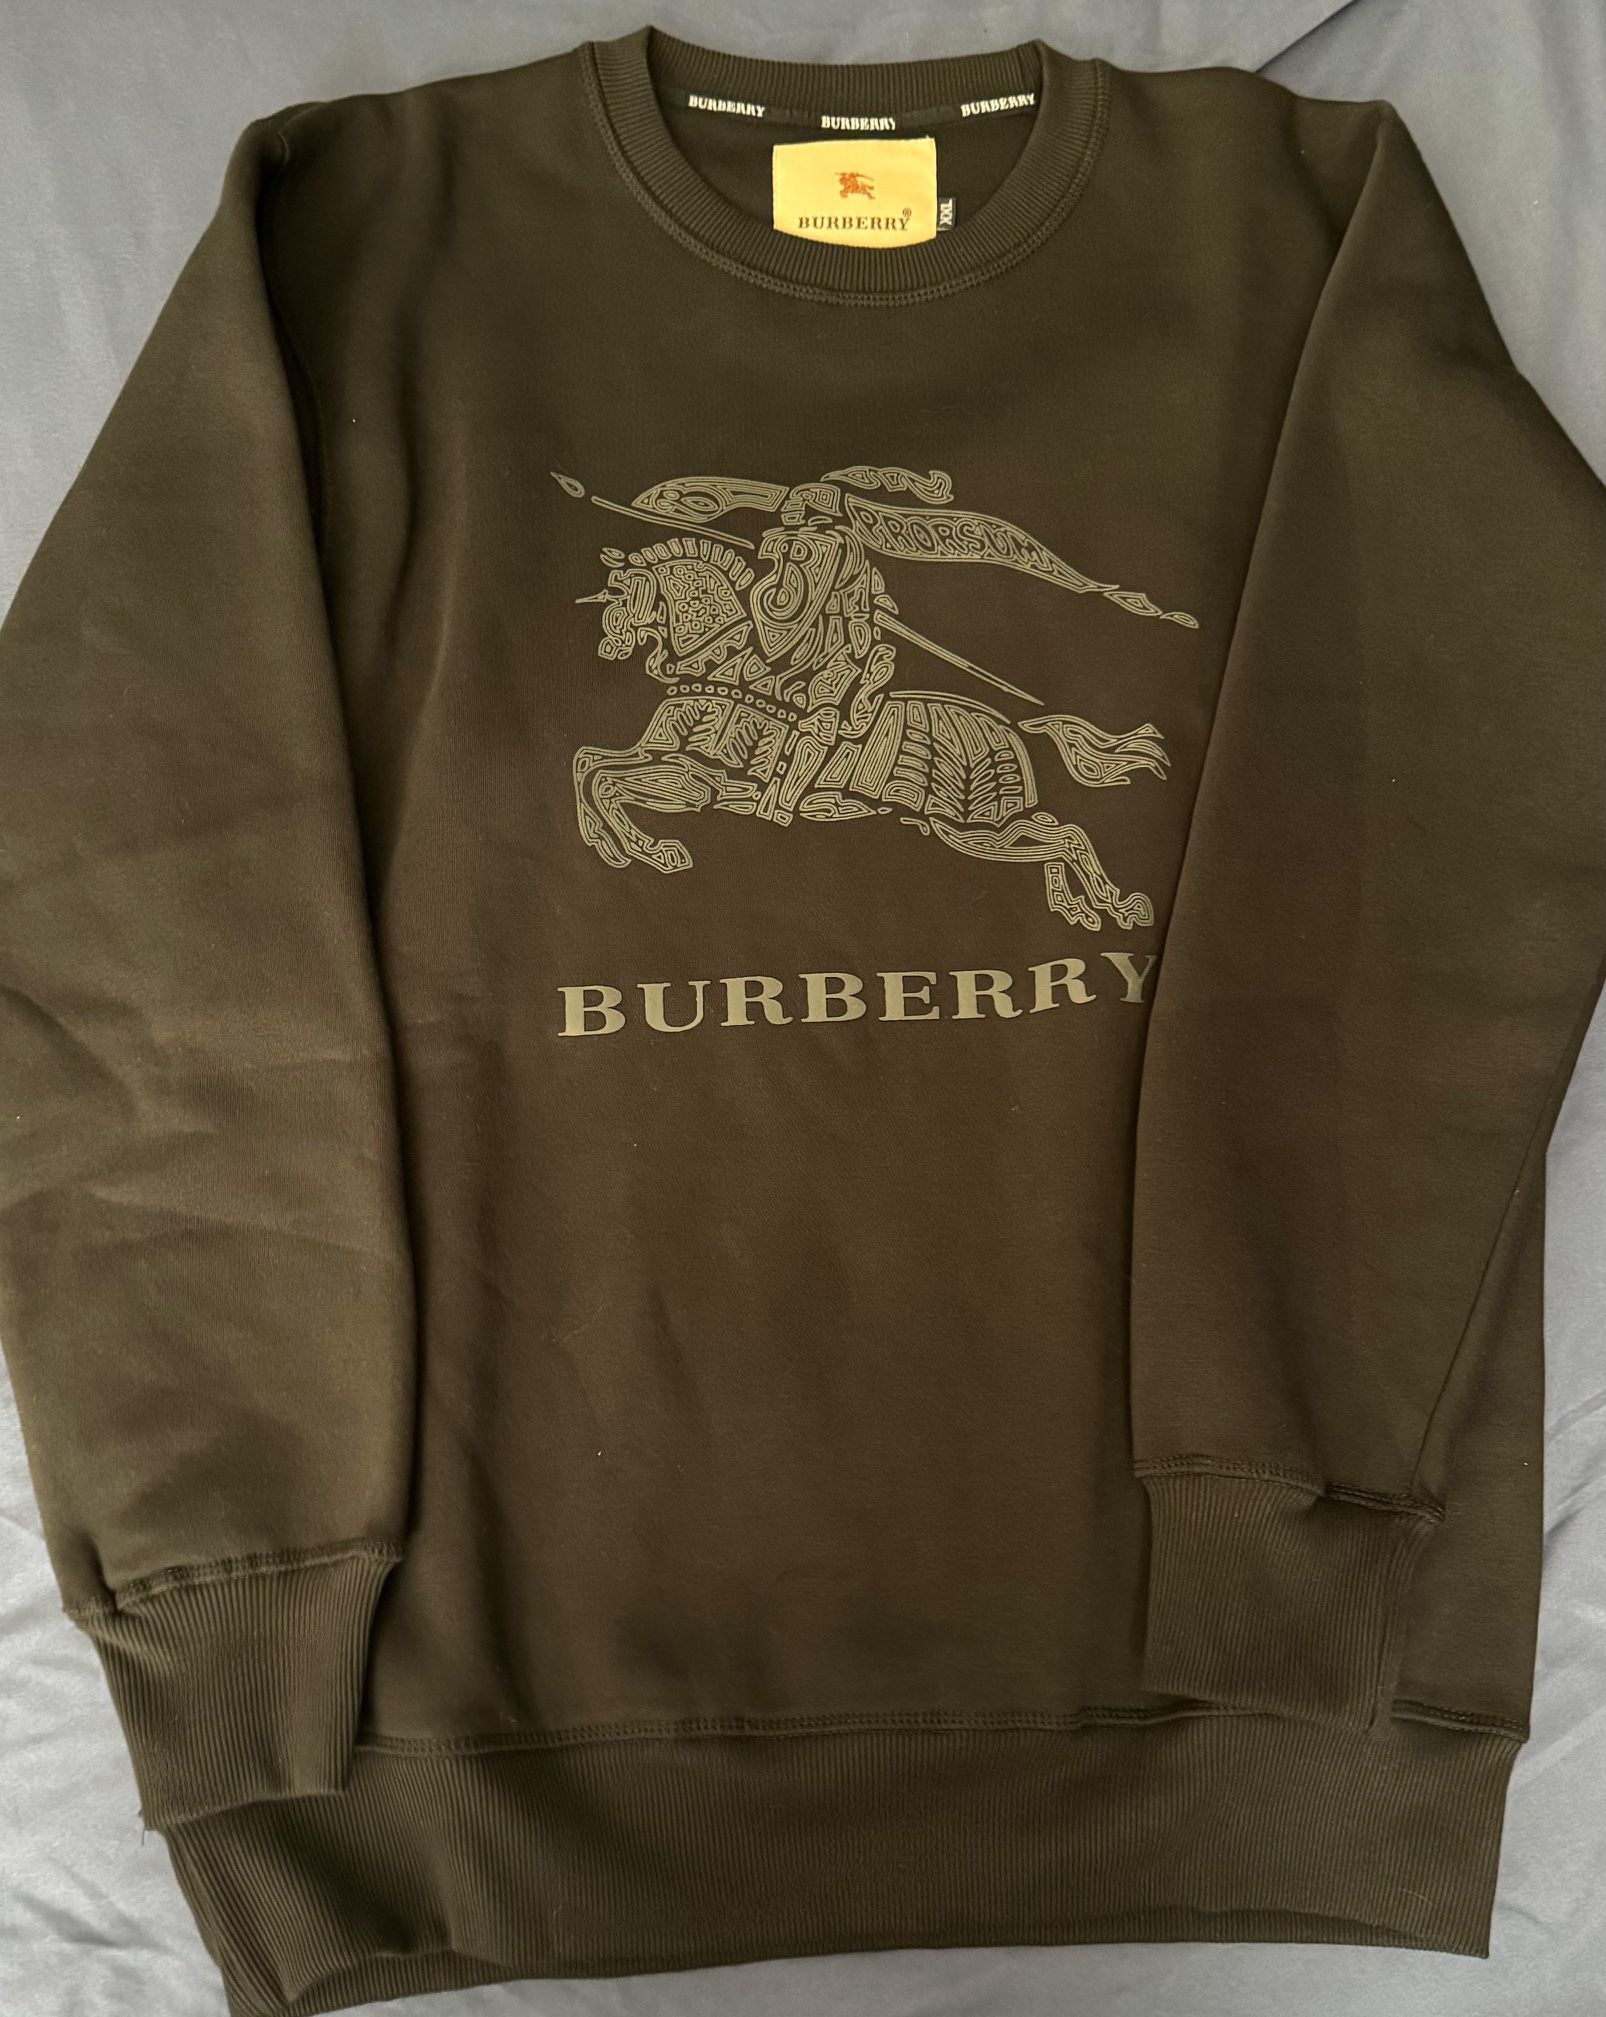  Burberry Sweatshirt 